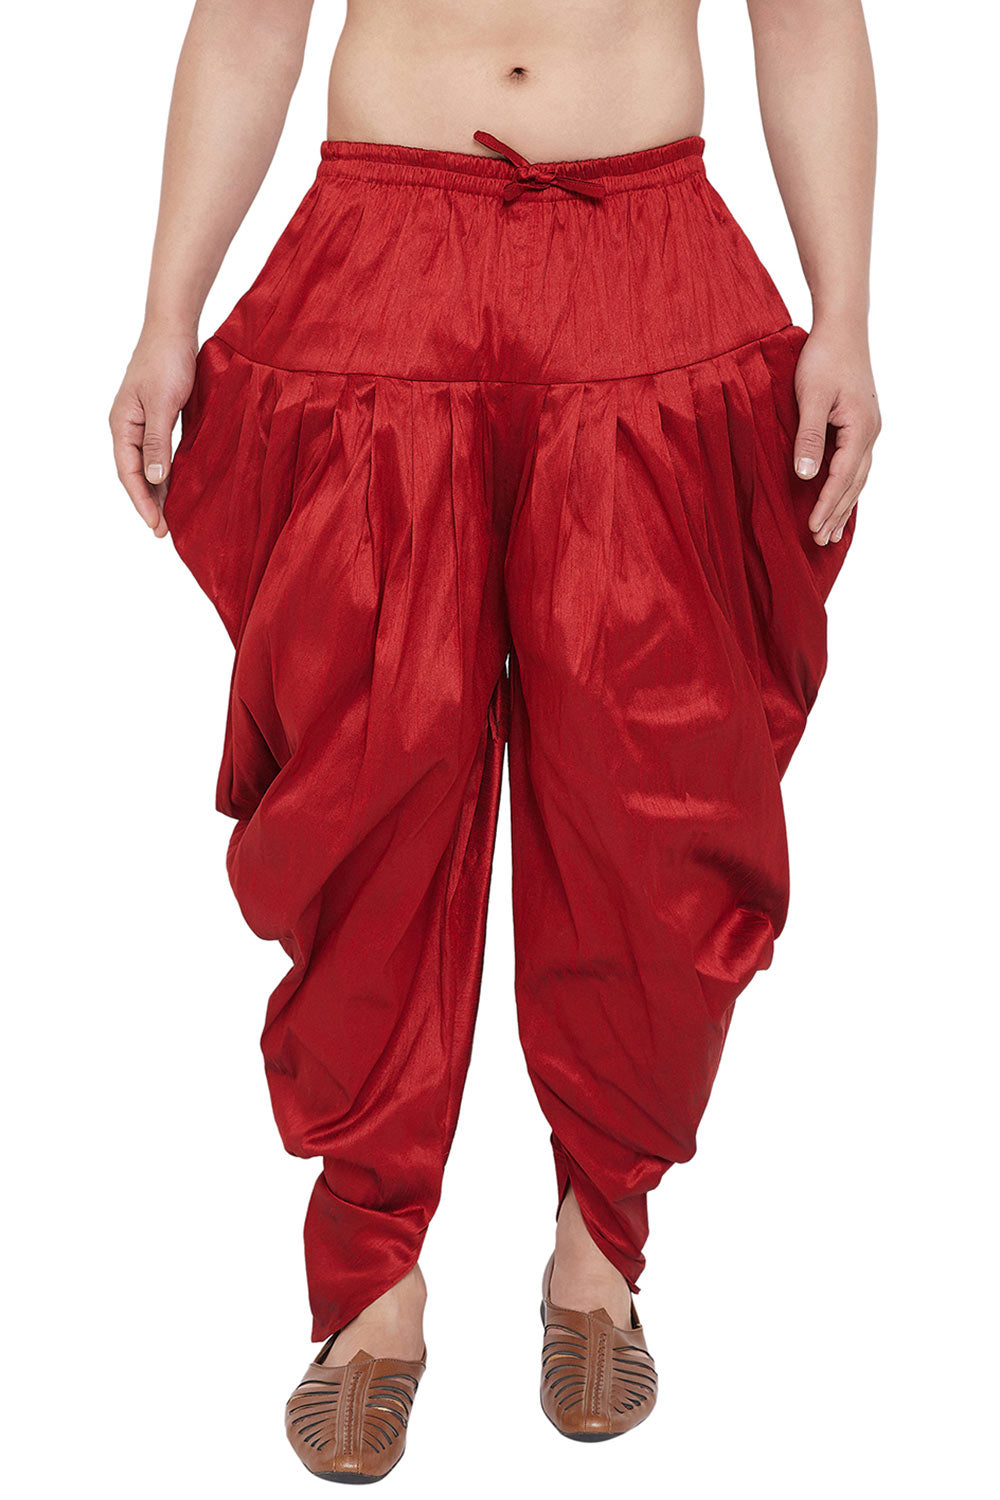 Buy Art Silk Solid Dhoti in Red